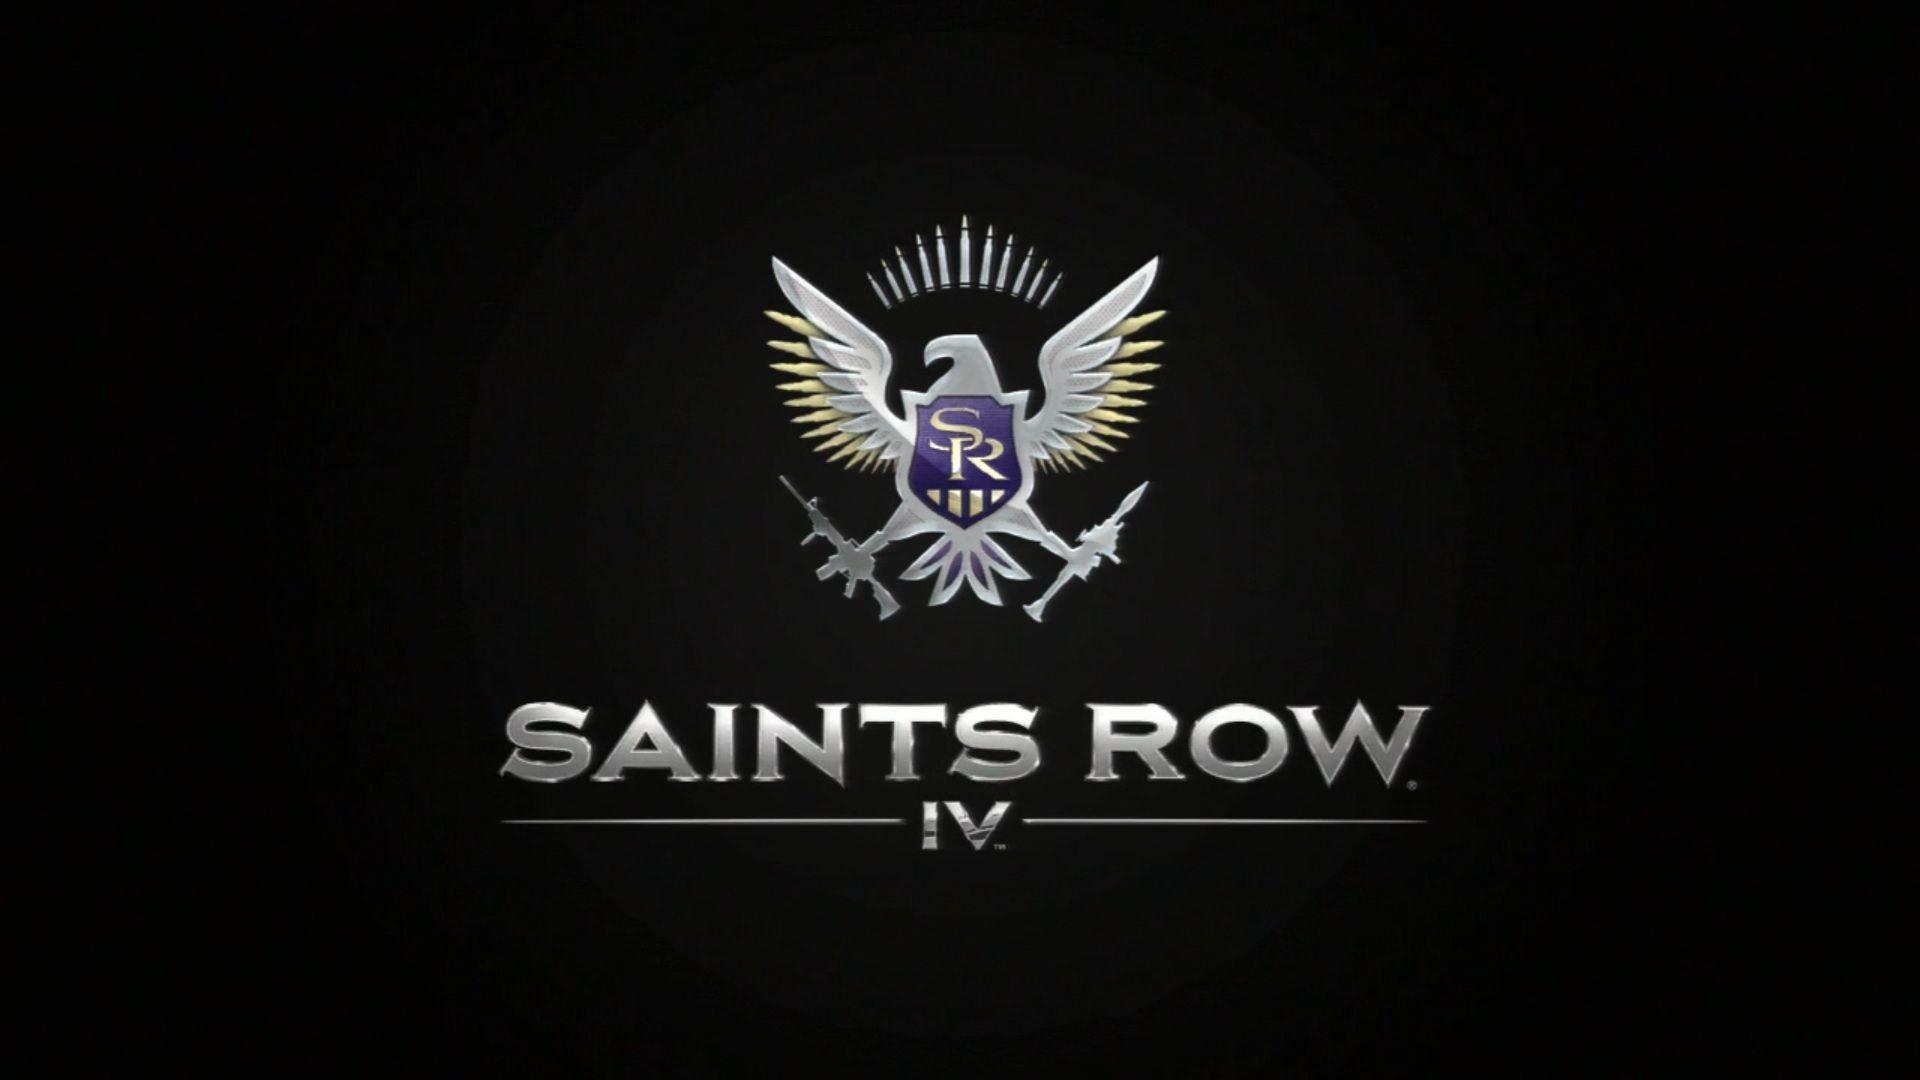 Saints row iv Logos